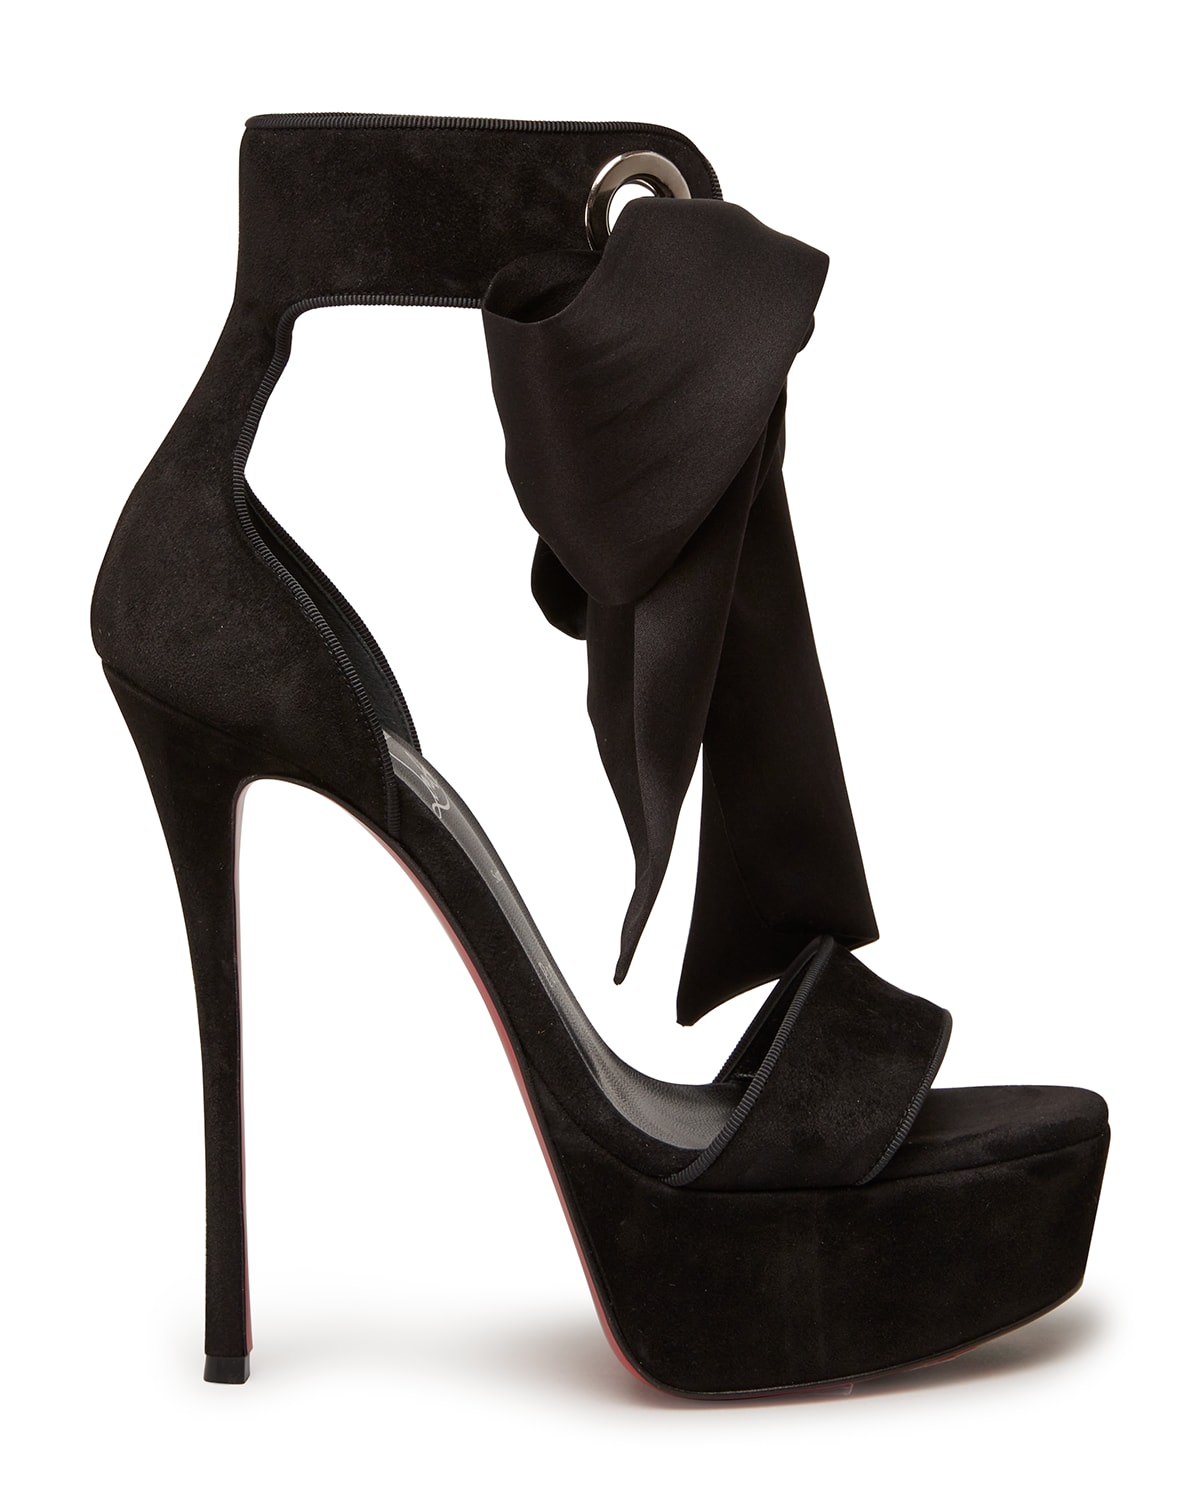 Christian Louboutin TORRIDA ALTA 150 Silk Tie Bow Heels Pump Shoes Sandals  $1395